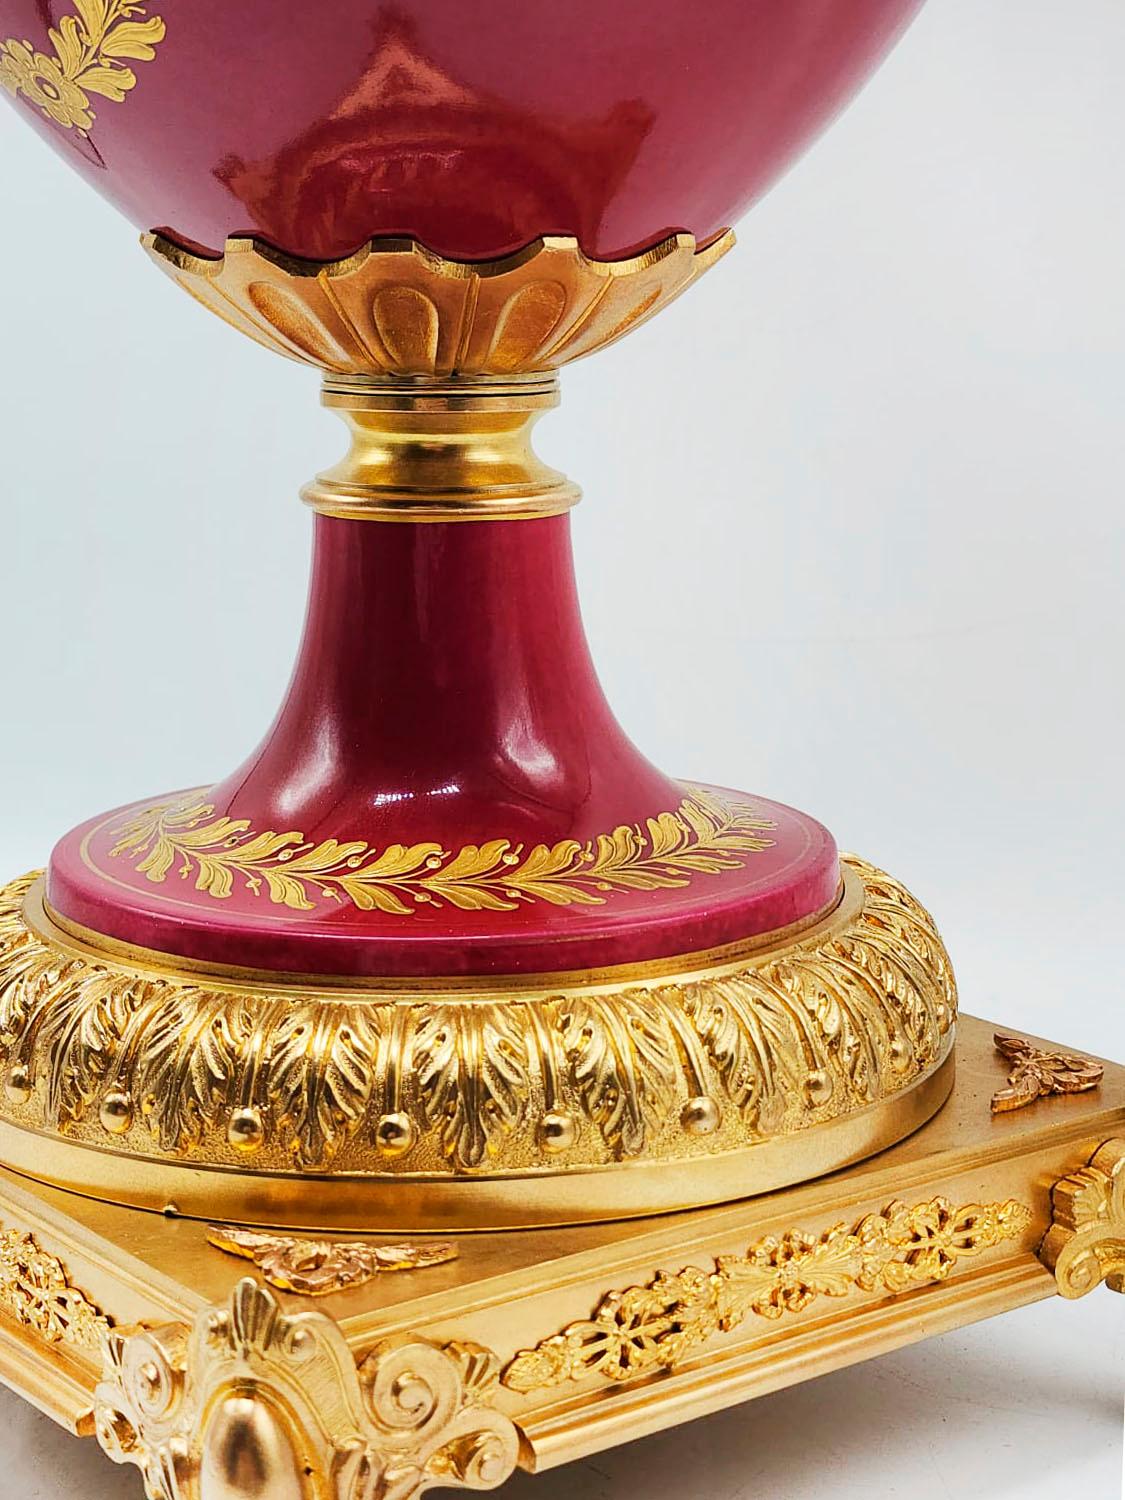 Napoleon III French porcelain vase Napoleonic Empire 19th century For Sale